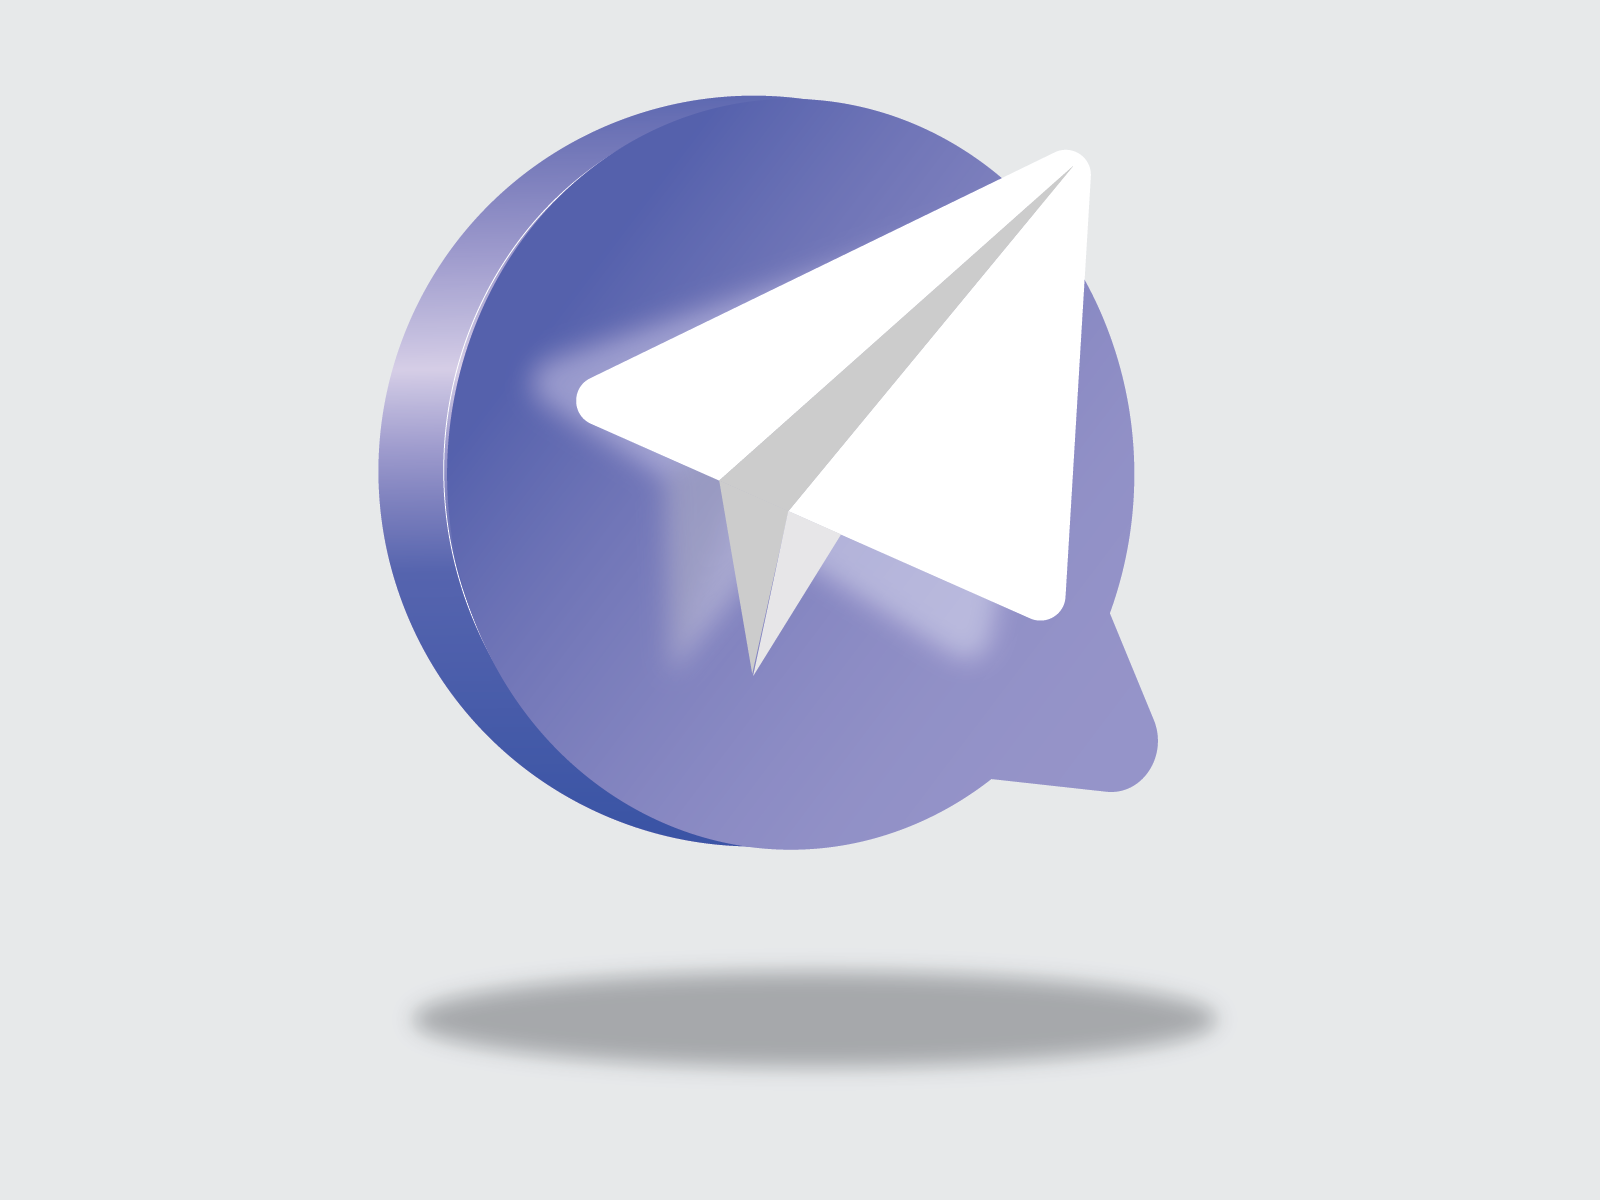 Web3 telegram. Логотип телеграмм. Пиктограмма телеграмм. Телеграм значок 3d. Телега логотип.